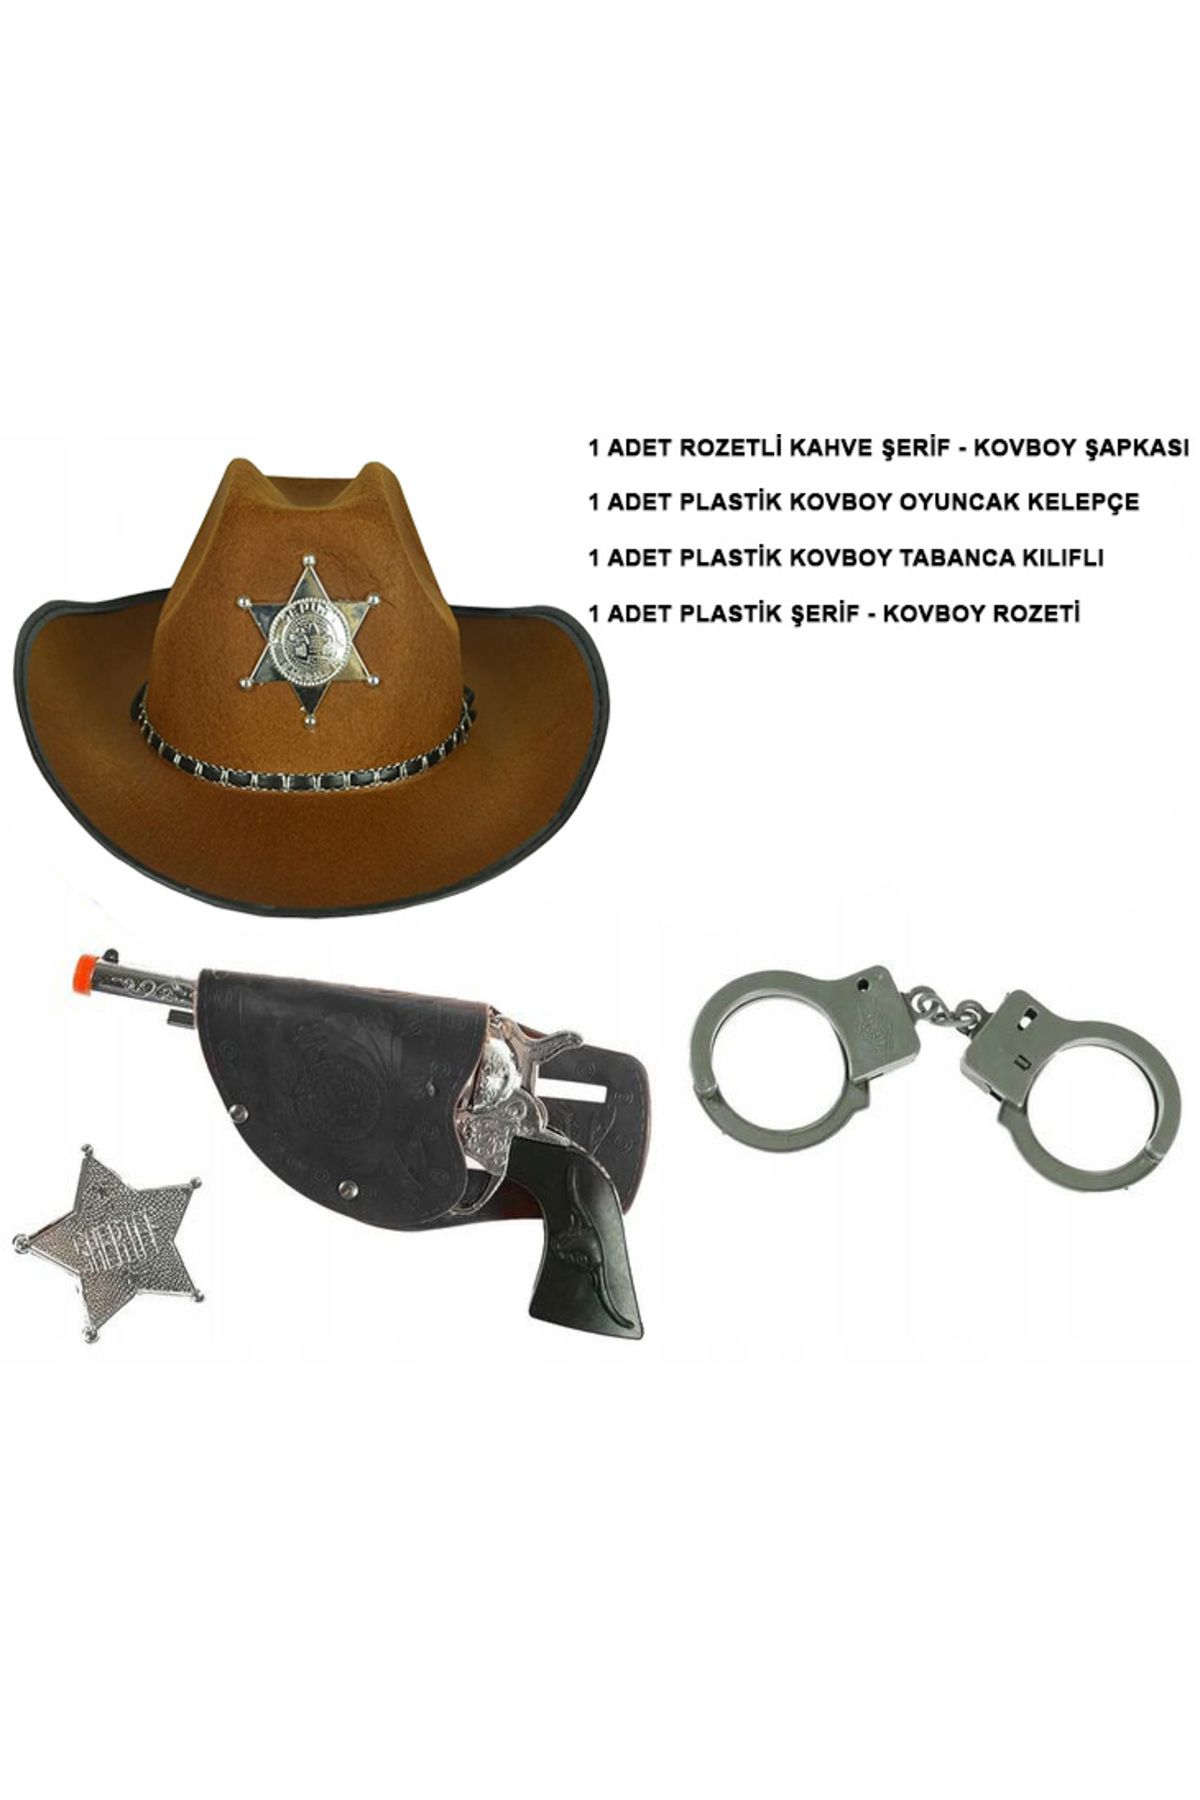 Go İthalat Çocuk Boy Kahverengi Şerif-Kovboy Şapka Tabanca Rozet ve Kelepçe Seti 4 Parça (3877)